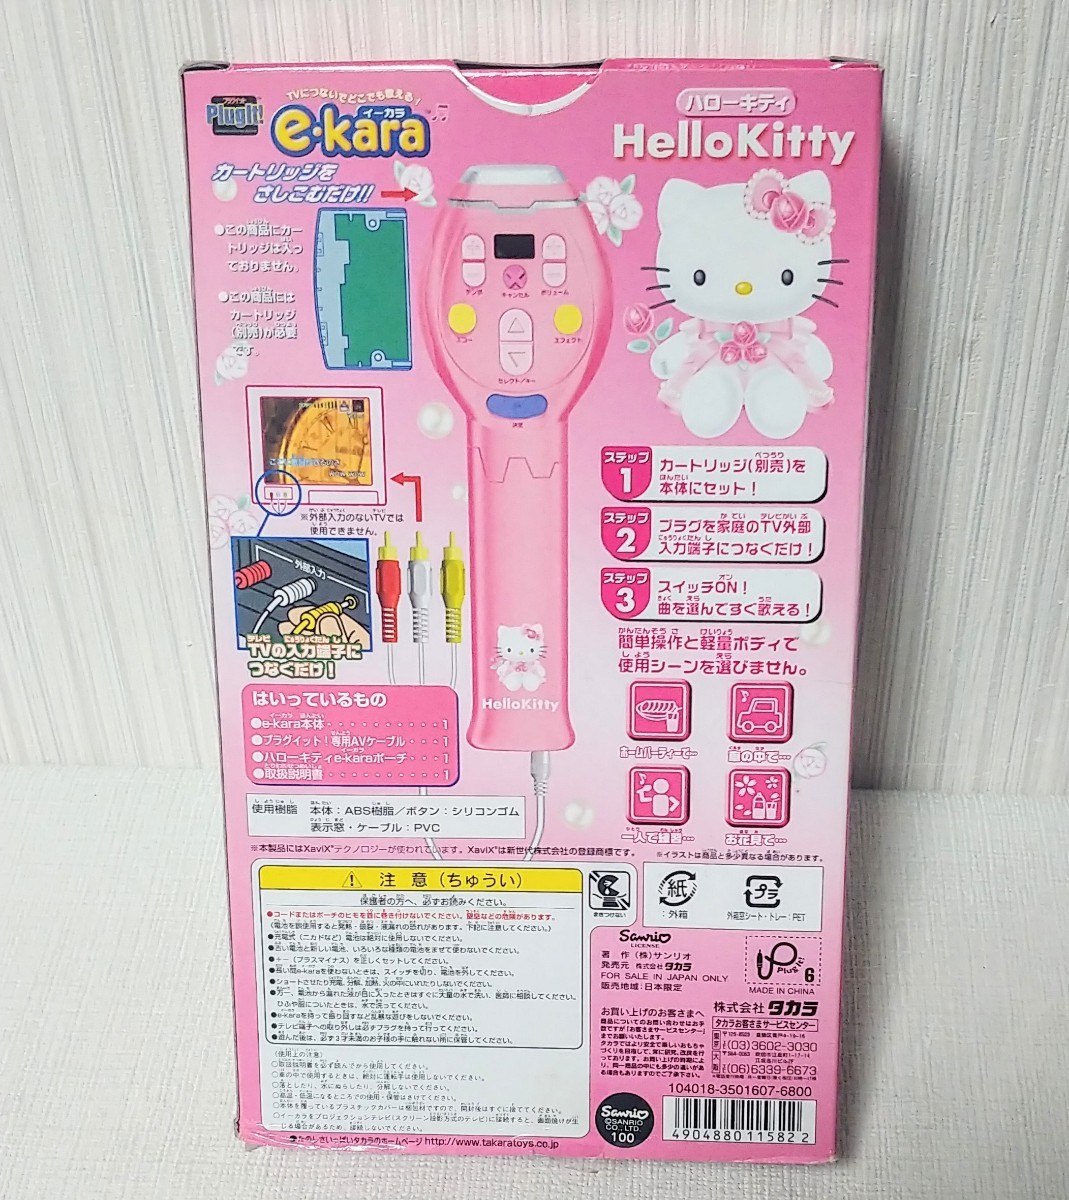 e-karai-kala Hello Kitty HelloKitty that time thing rare Sanrio karaoke i-kala exclusive use cartridge attaching 